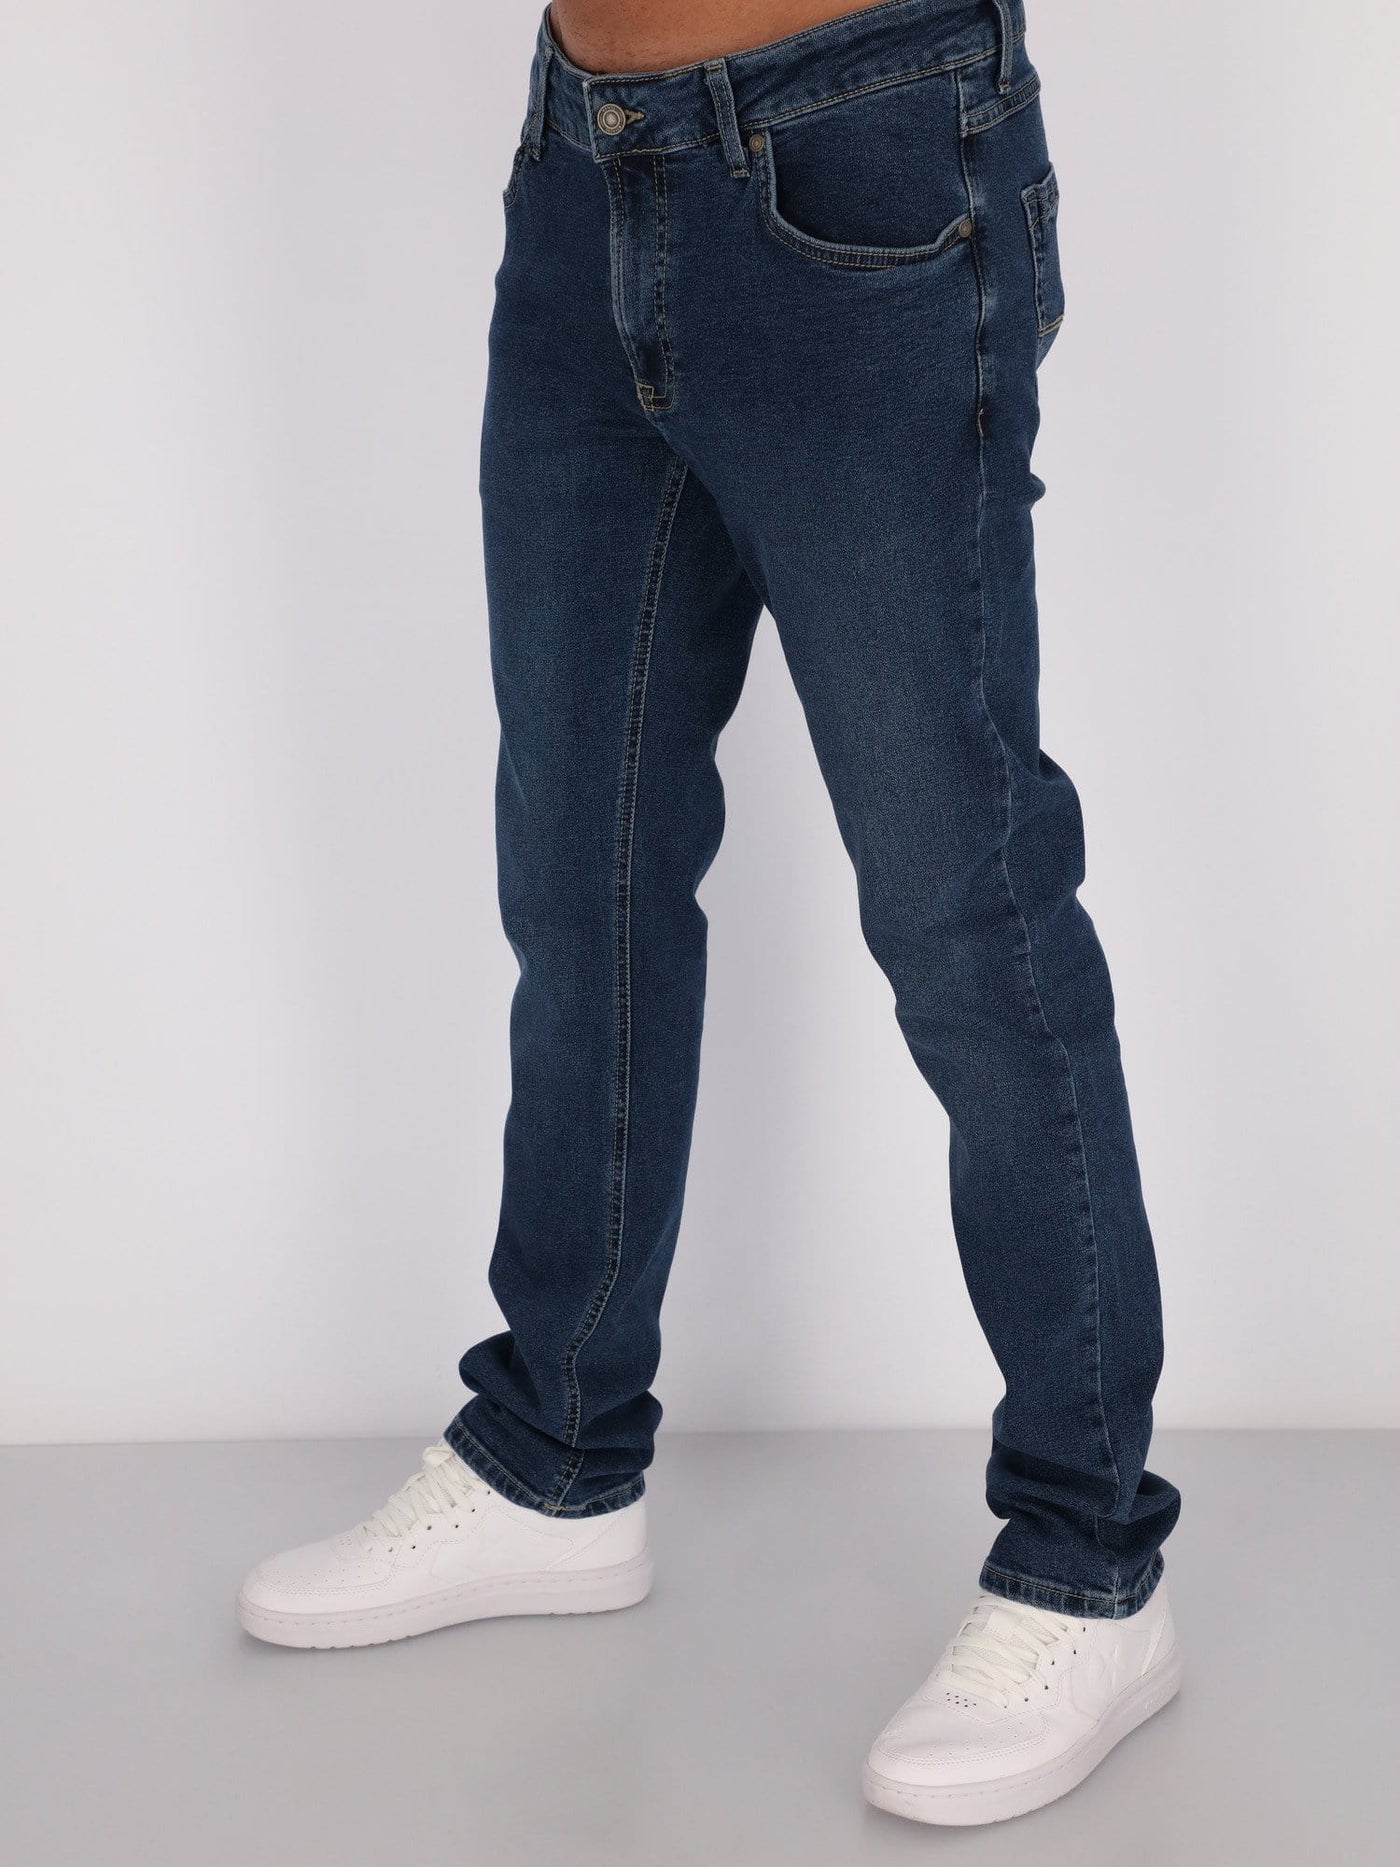 Daniel Hechter Jeans Lycra Denim Jeans with Straight Cut